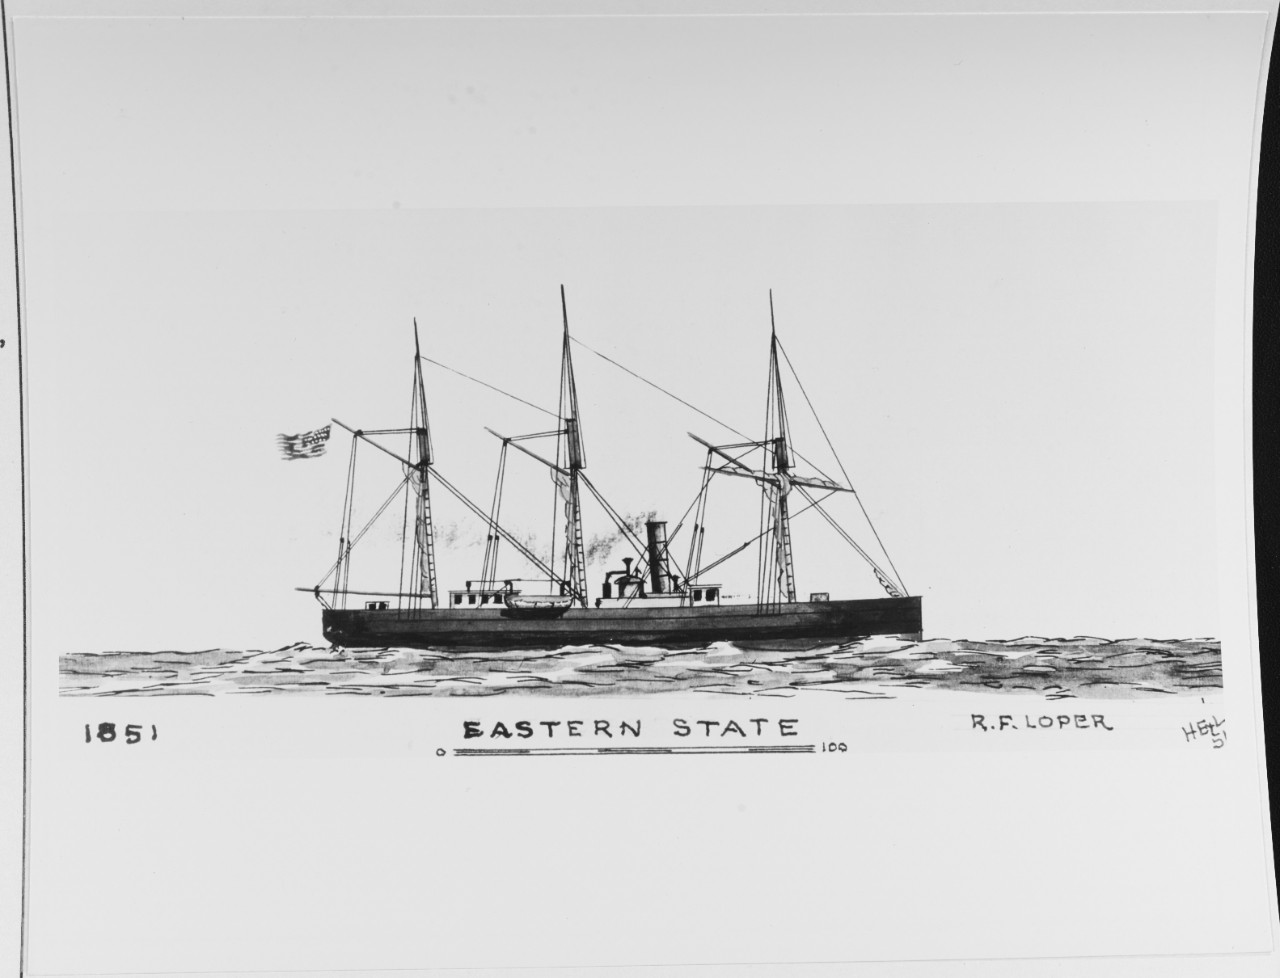 EASTERN STATE (American merchant steamer, 1851-1871)